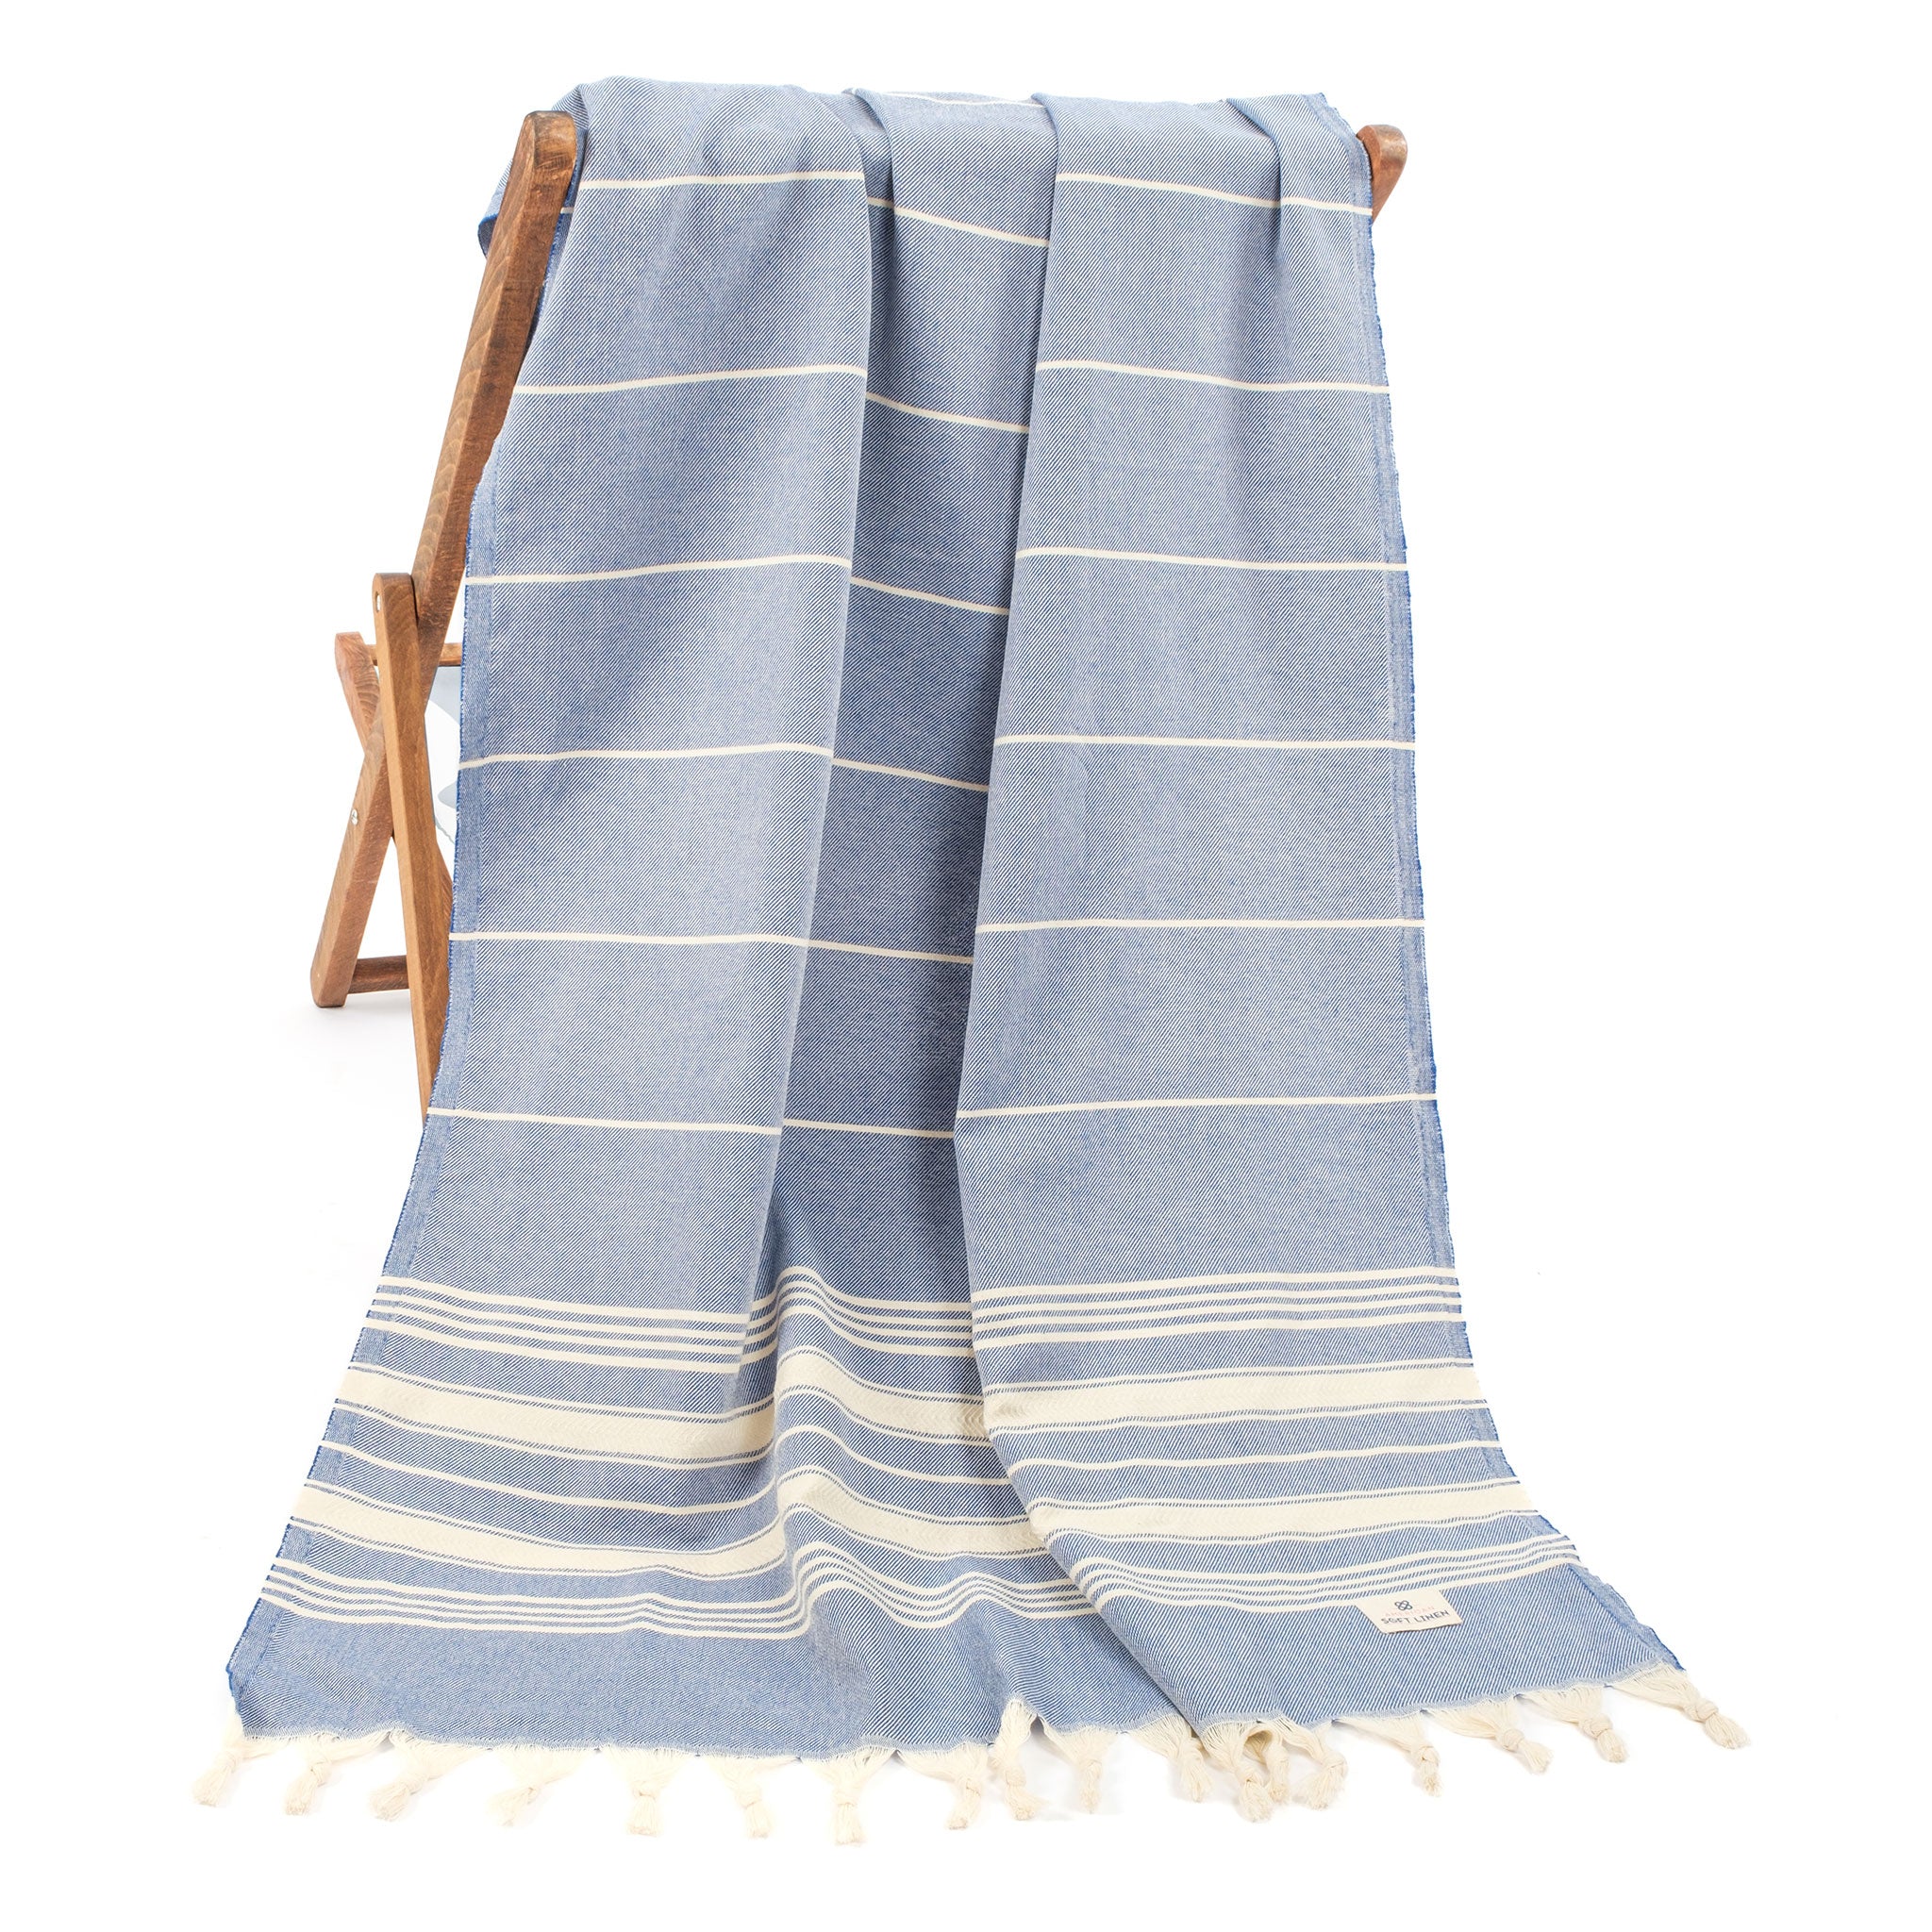 American Soft Linen - 100% Cotton Turkish Peshtemal Towels - 44 Set Case Pack - Blue - 1